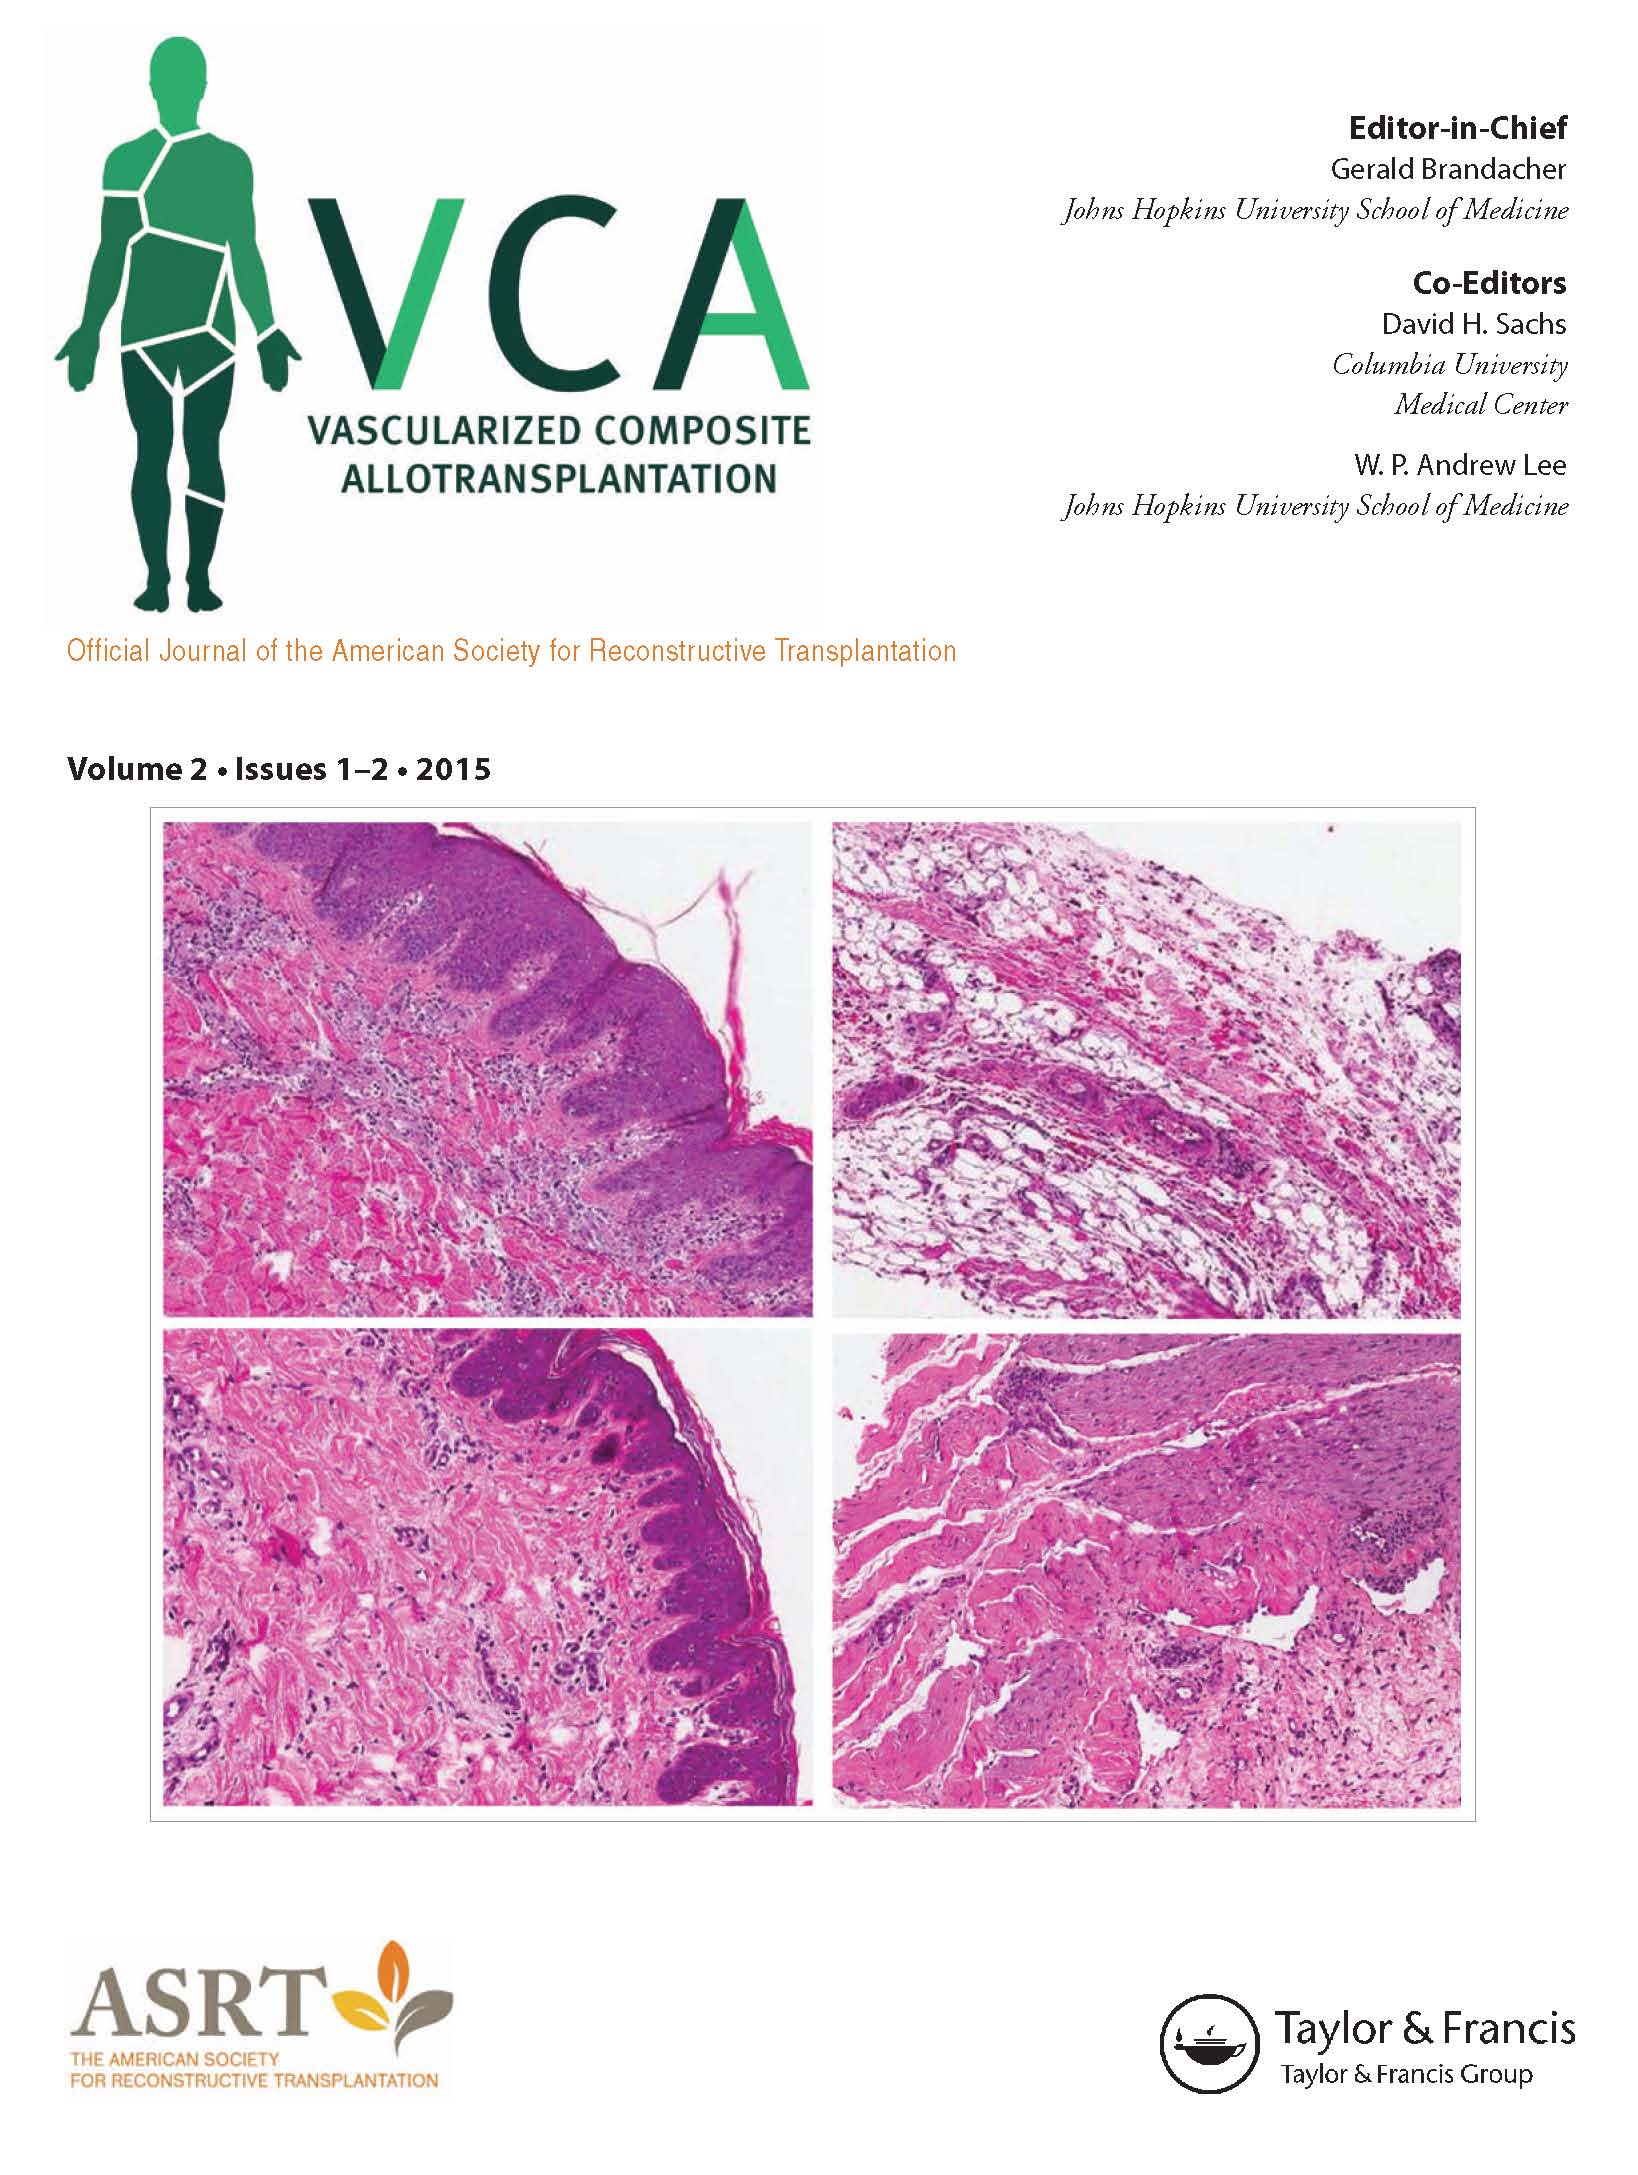 Cover image for Vascularized Composite Allotransplantation, Volume 1, Issue 1-2, 2014